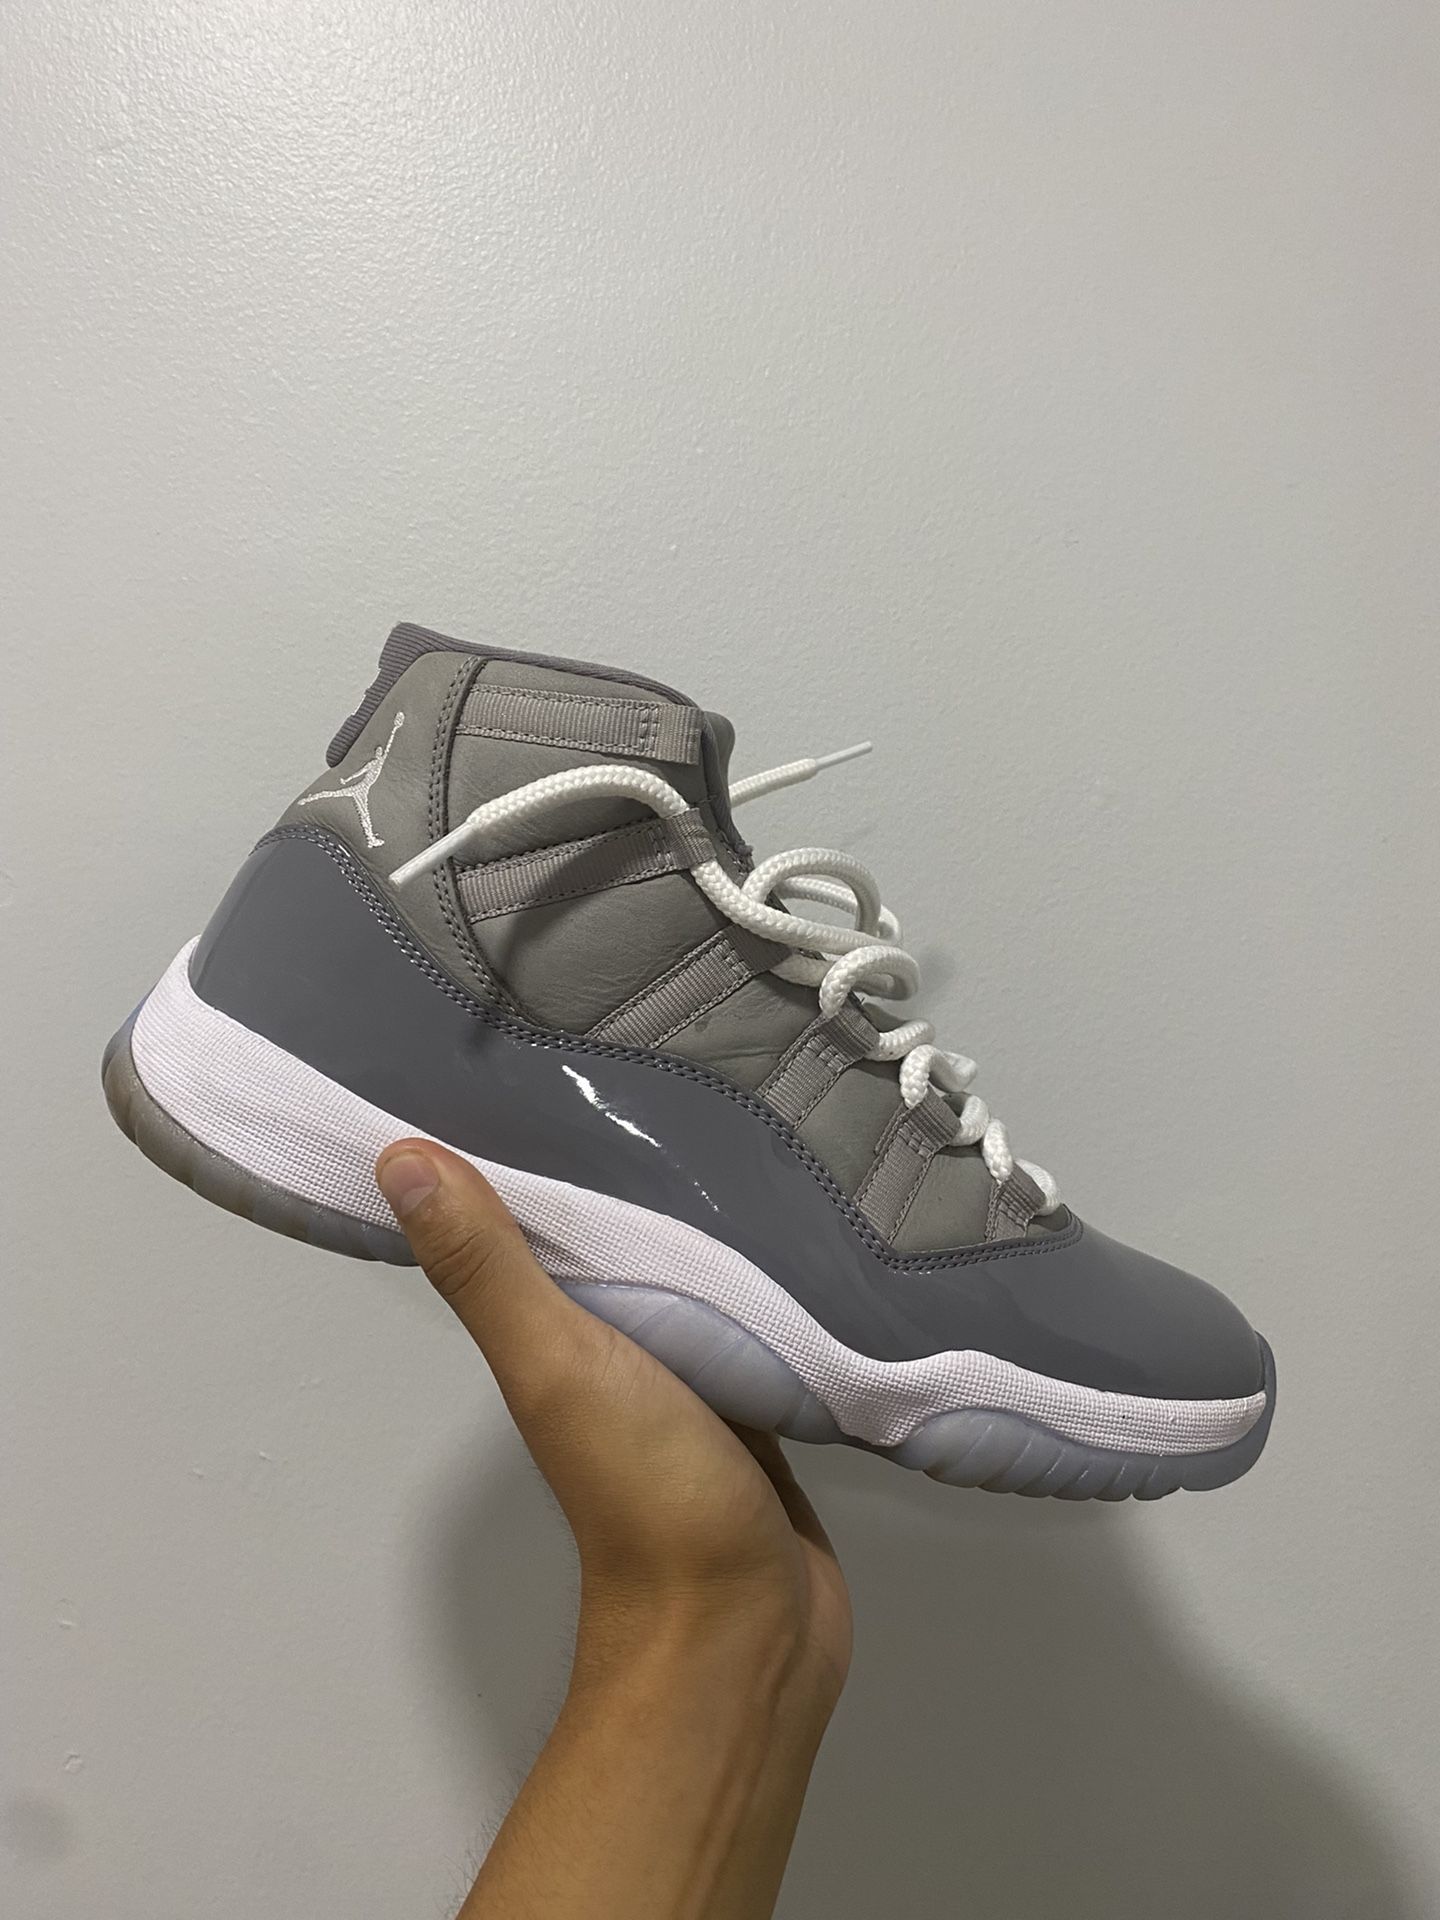 Jordan 11 ‘Cool Gray’ Size 8